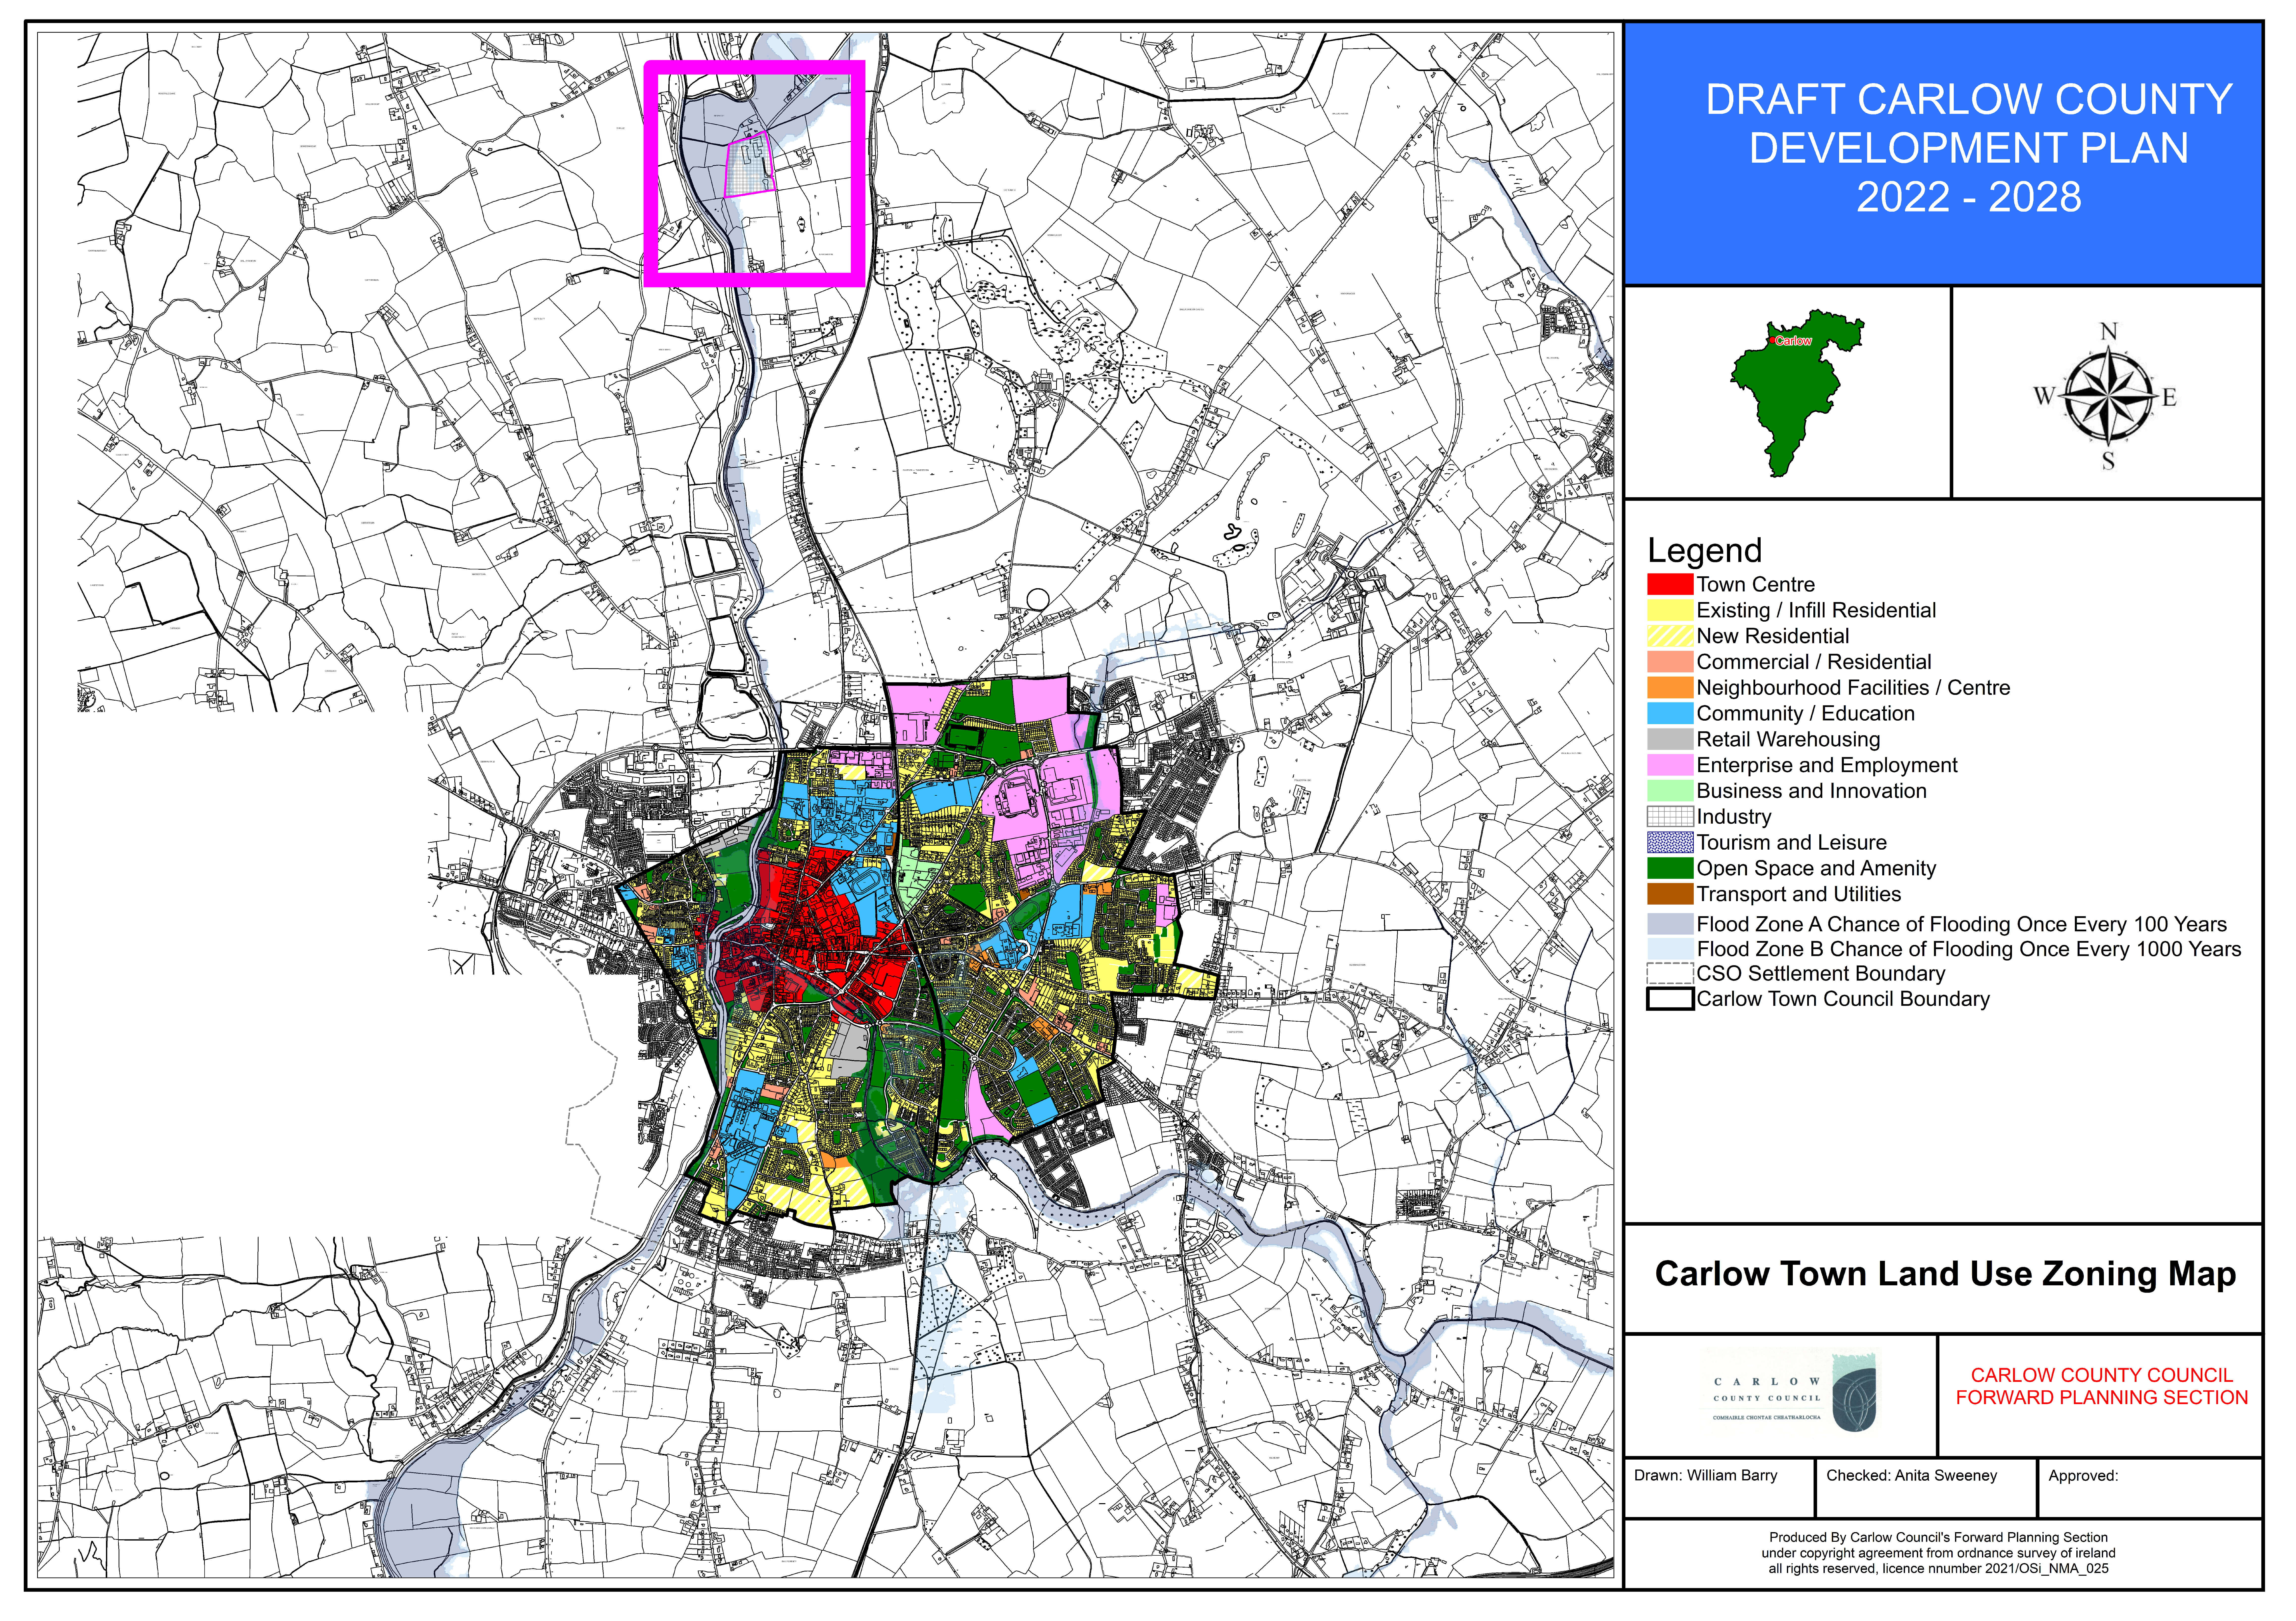 Carlow Town Land Use Zoning Map